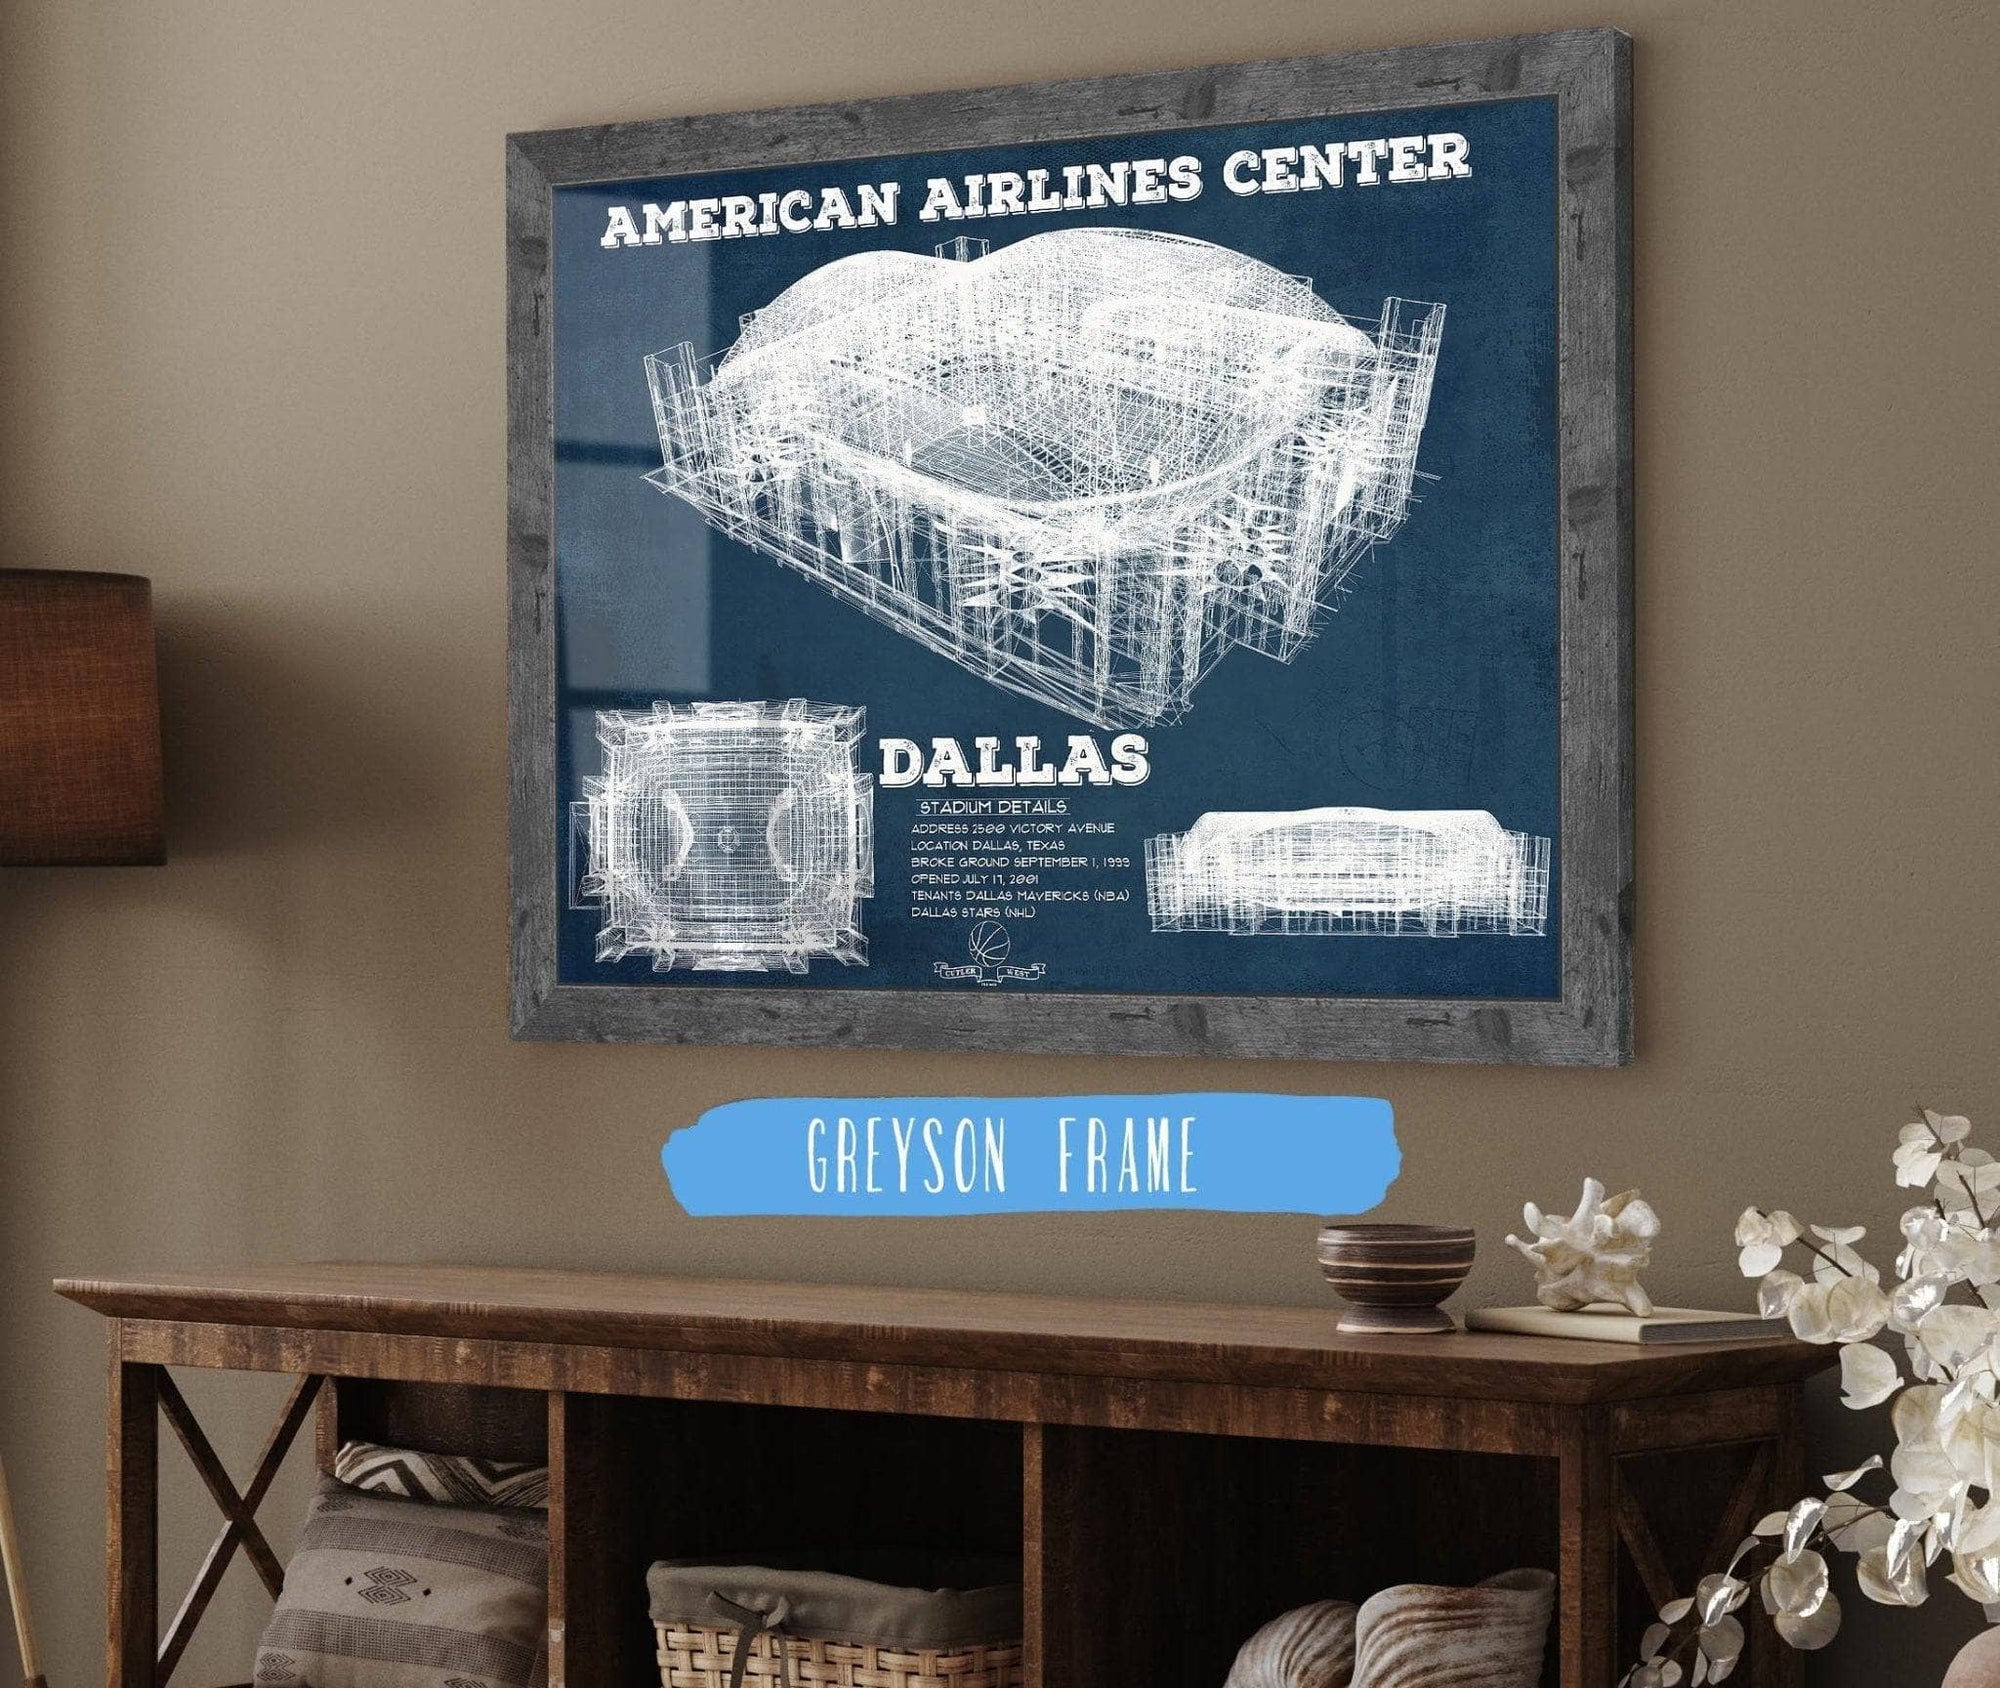 Cutler West Basketball Collection Dallas Mavericks - Vintage American Airlines Center NBA Print